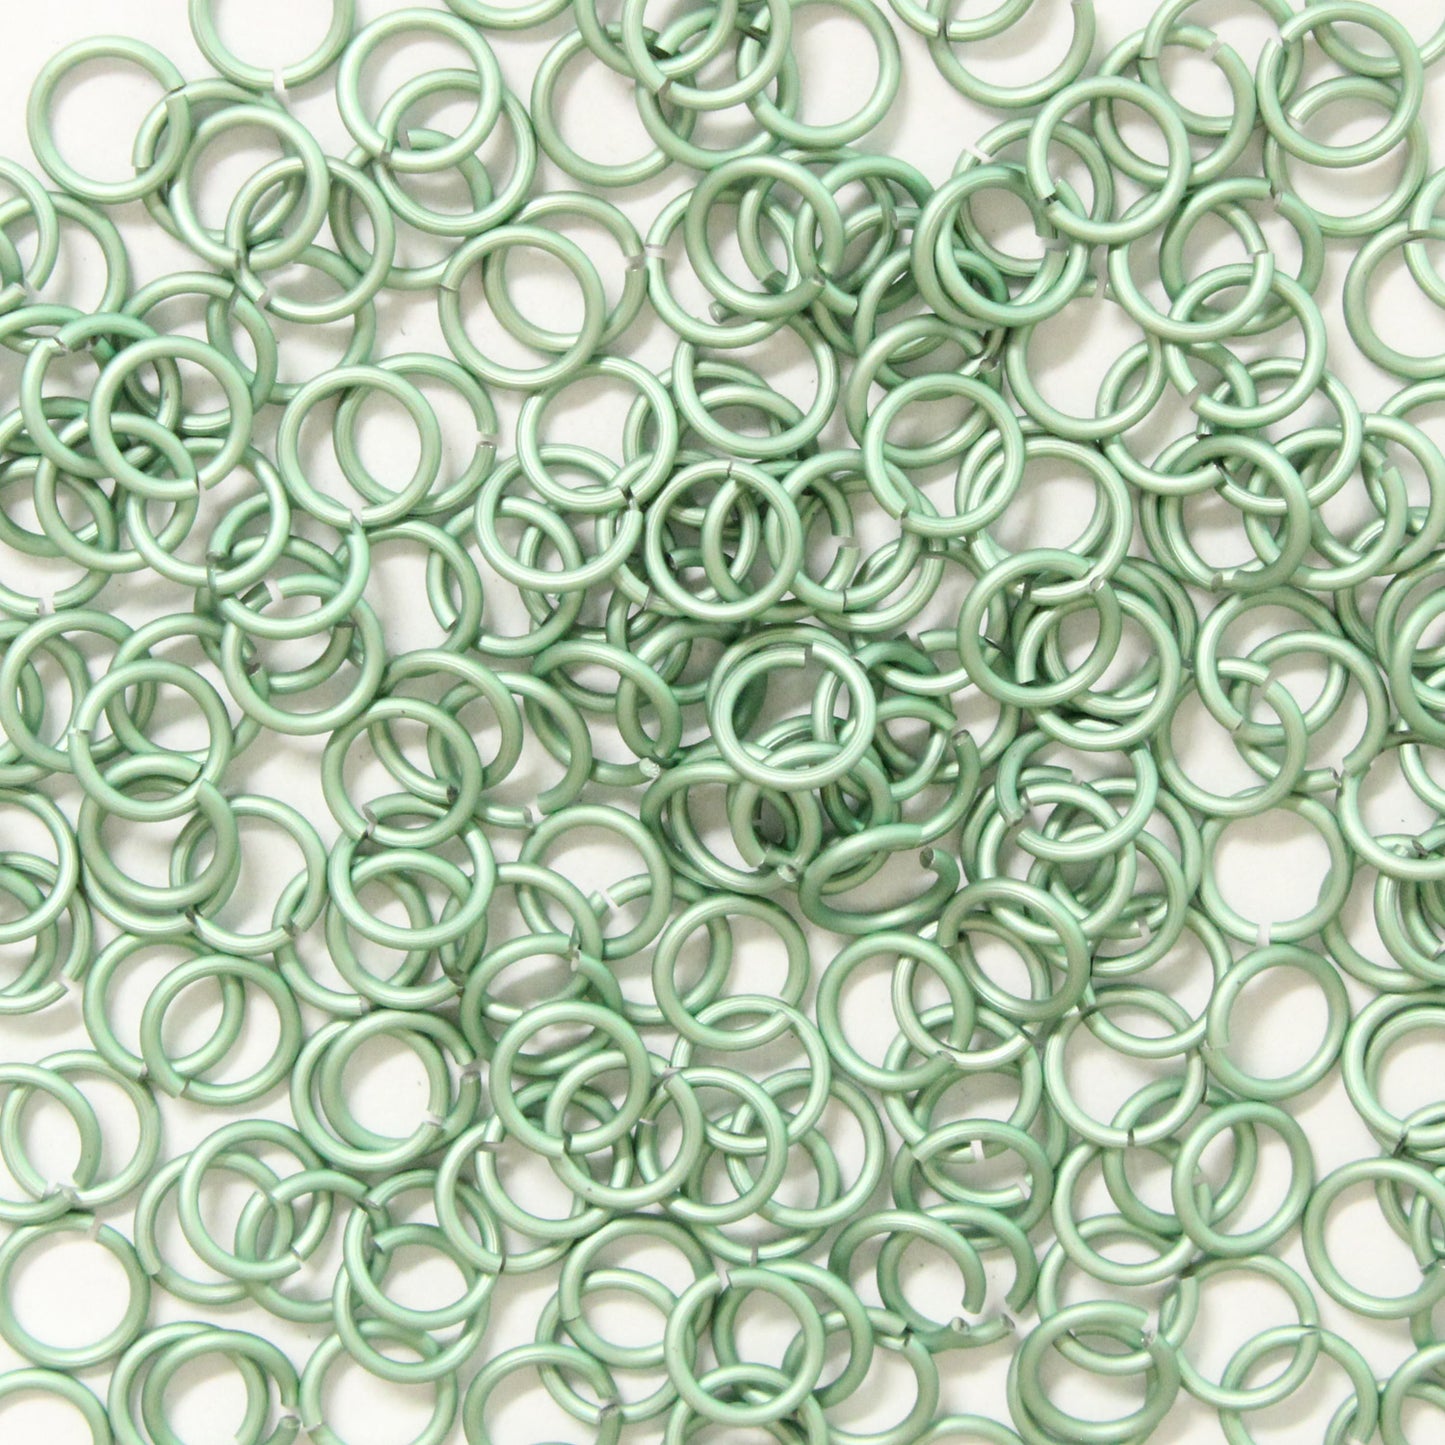 MATTE SEAFOAM GREEN 4mm 20 GA Jump Rings / 5 Gram Pack (approx 240) / sawcut round open anodized aluminum